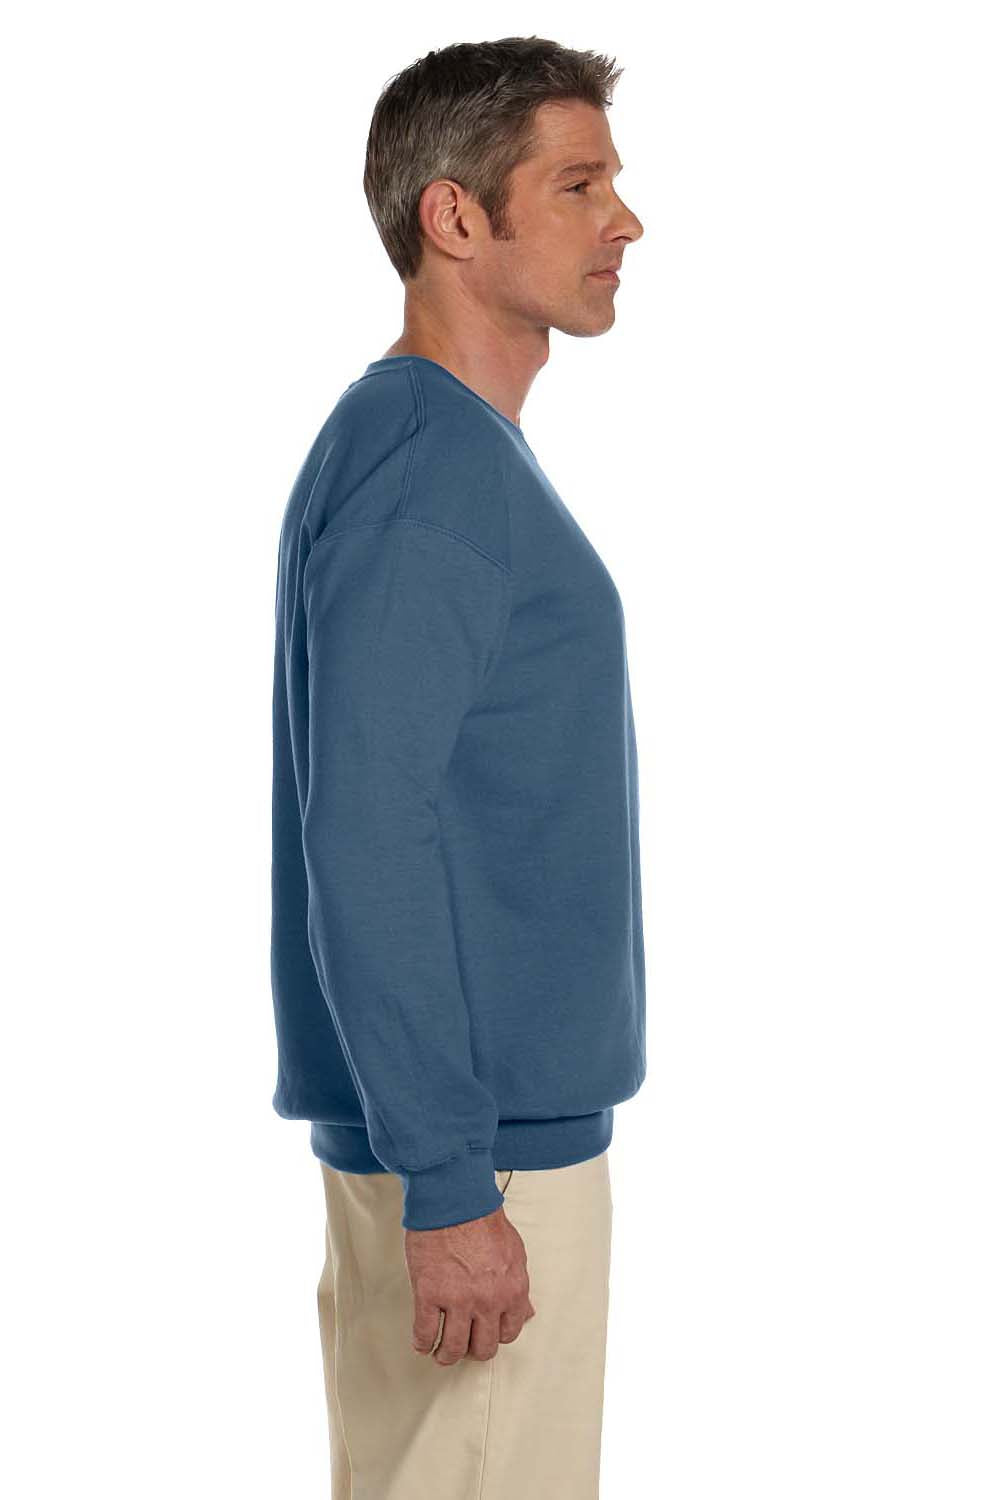 Gildan G180 Mens Fleece Crewneck Sweatshirt Indigo Blue Side